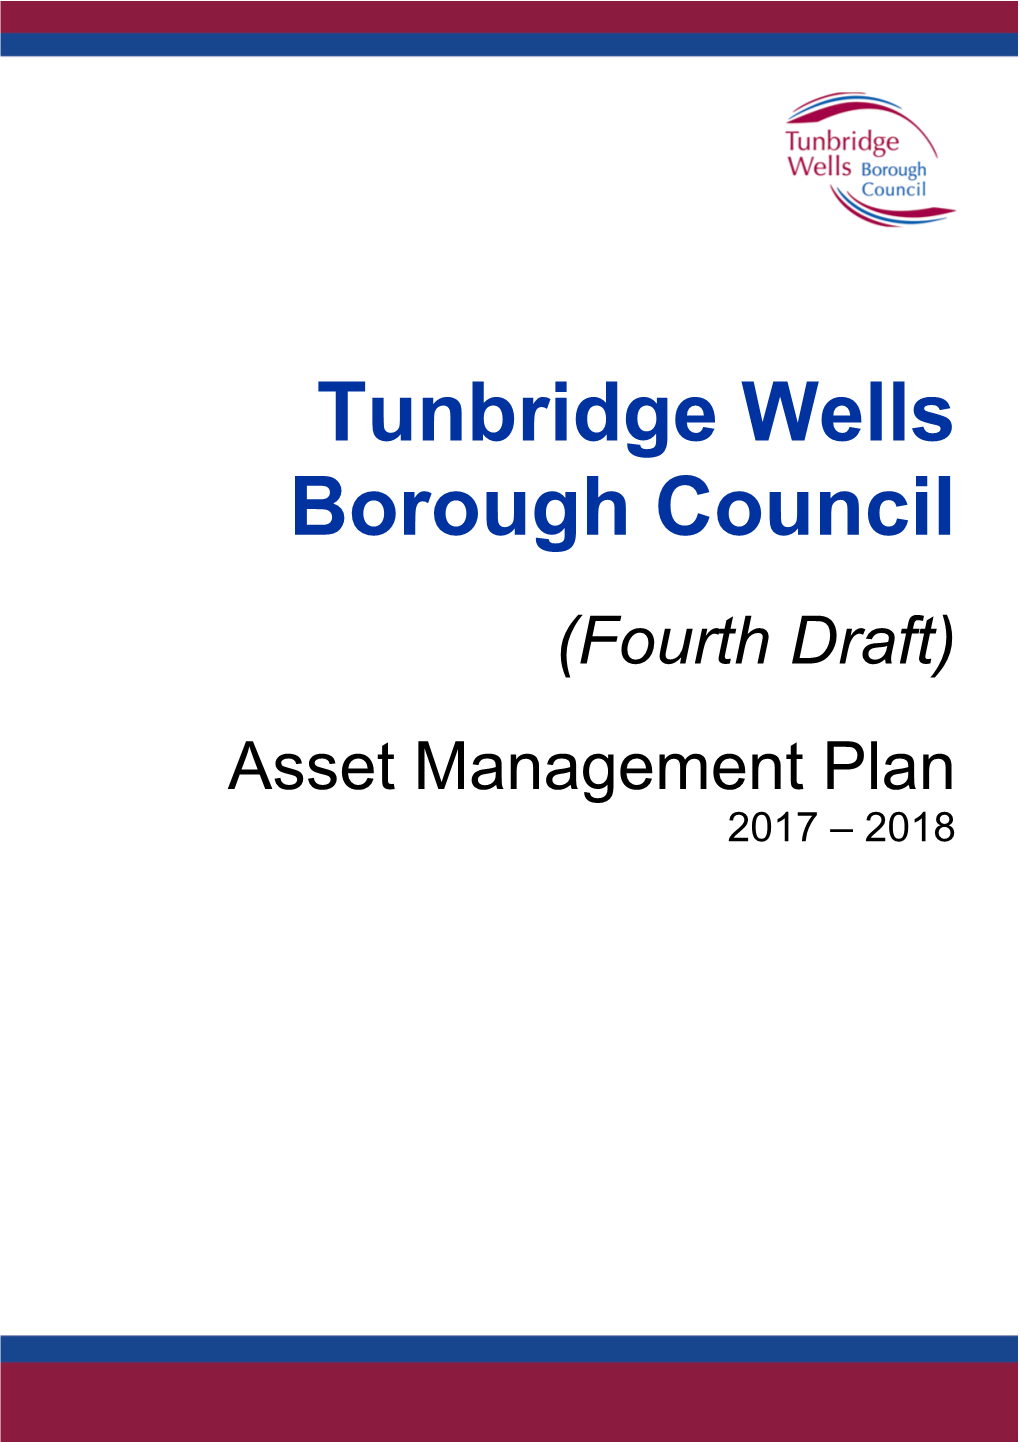 Tunbridge Wells Borough Council Asset Management Plan